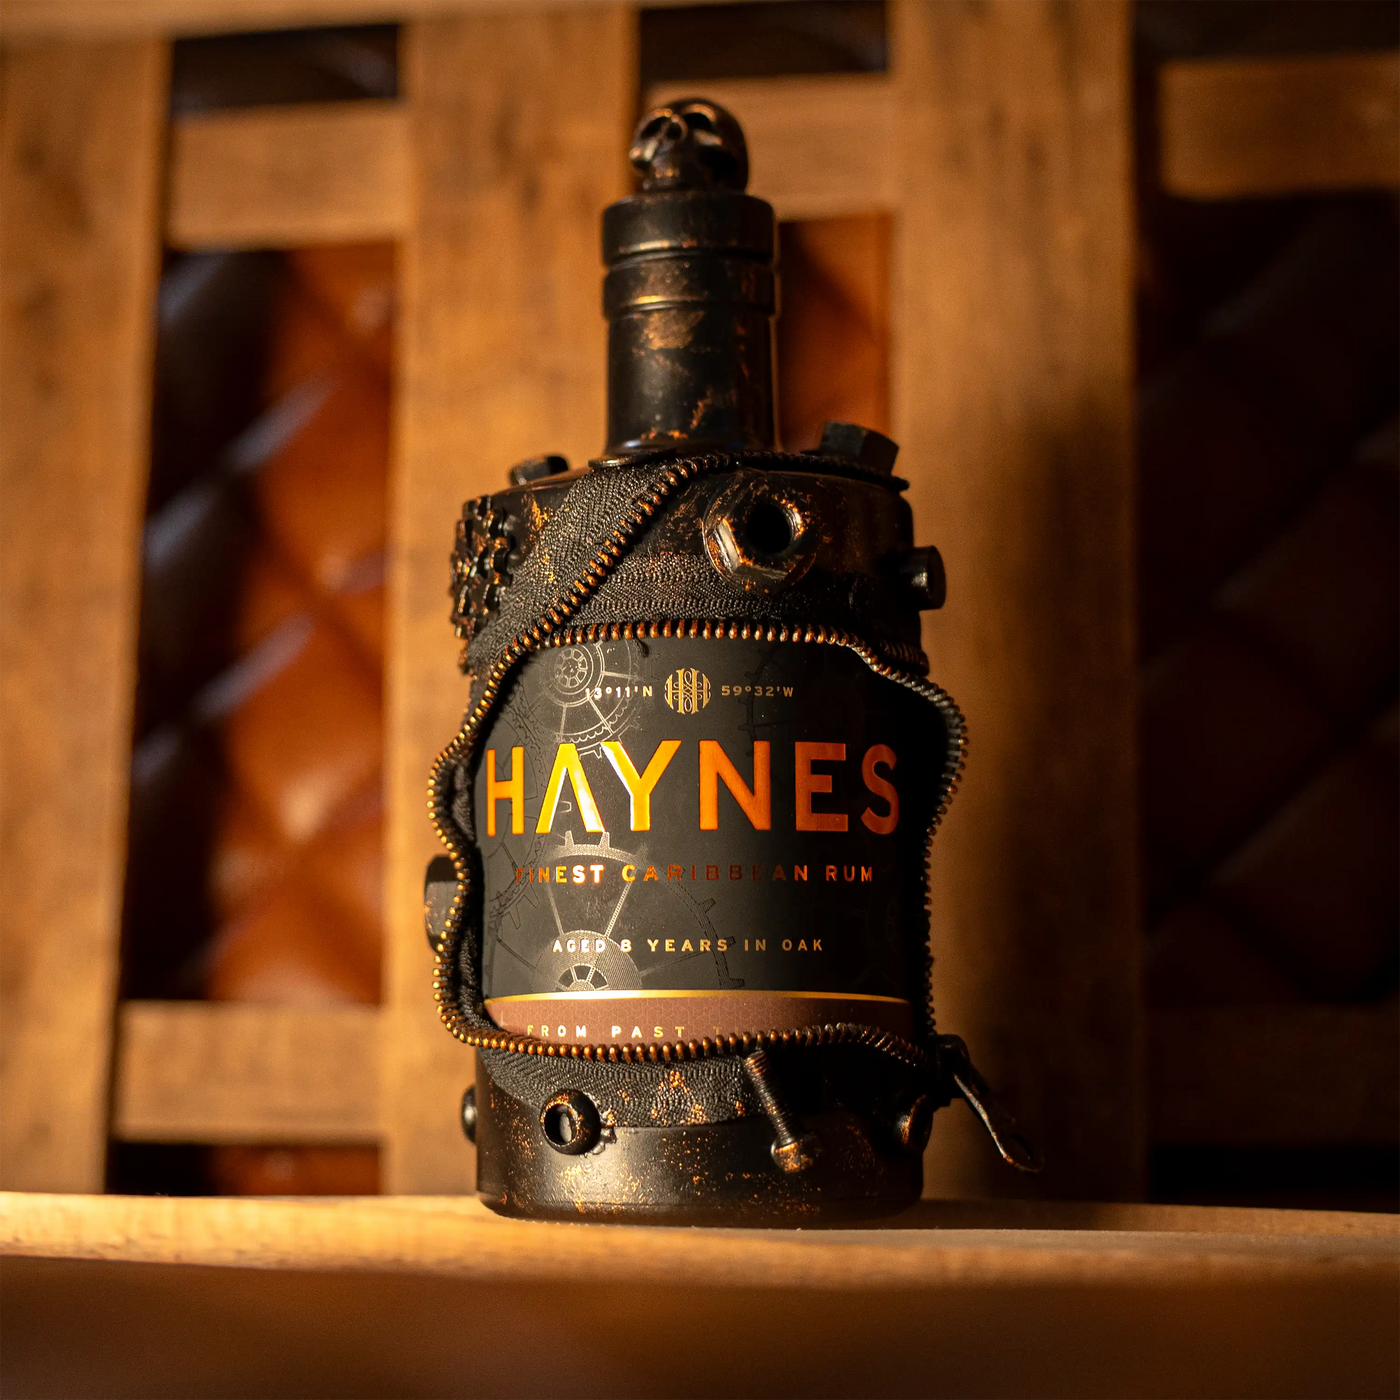 Haynes Finest Rum Old Bottle Limited Edition